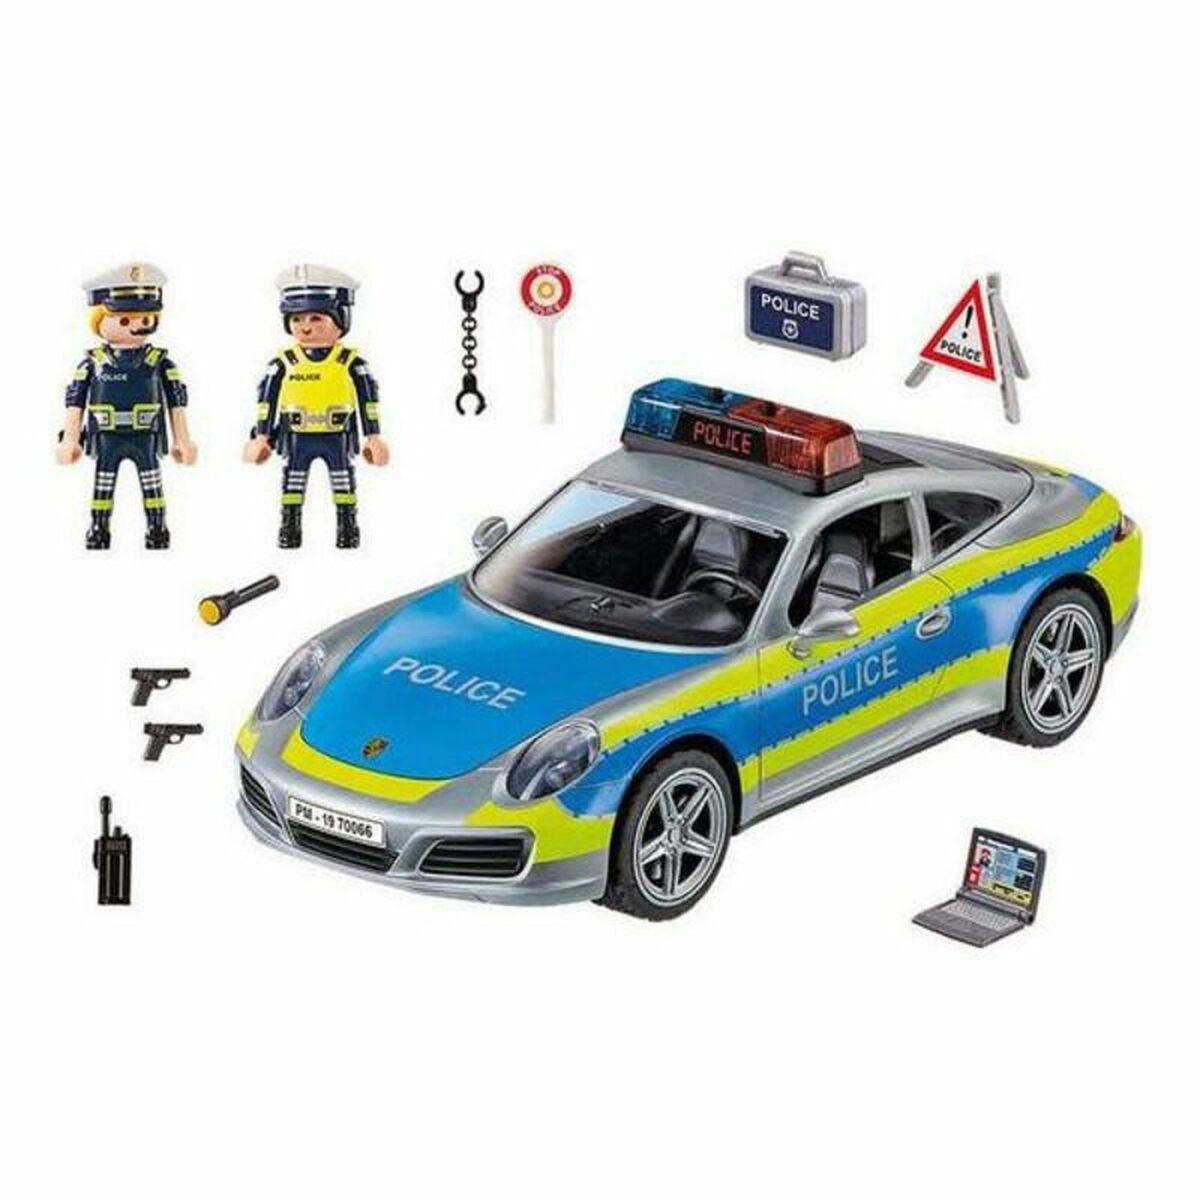 Porsche 911 Carrera 4S Police Playmobil 70066 (36 pcs)